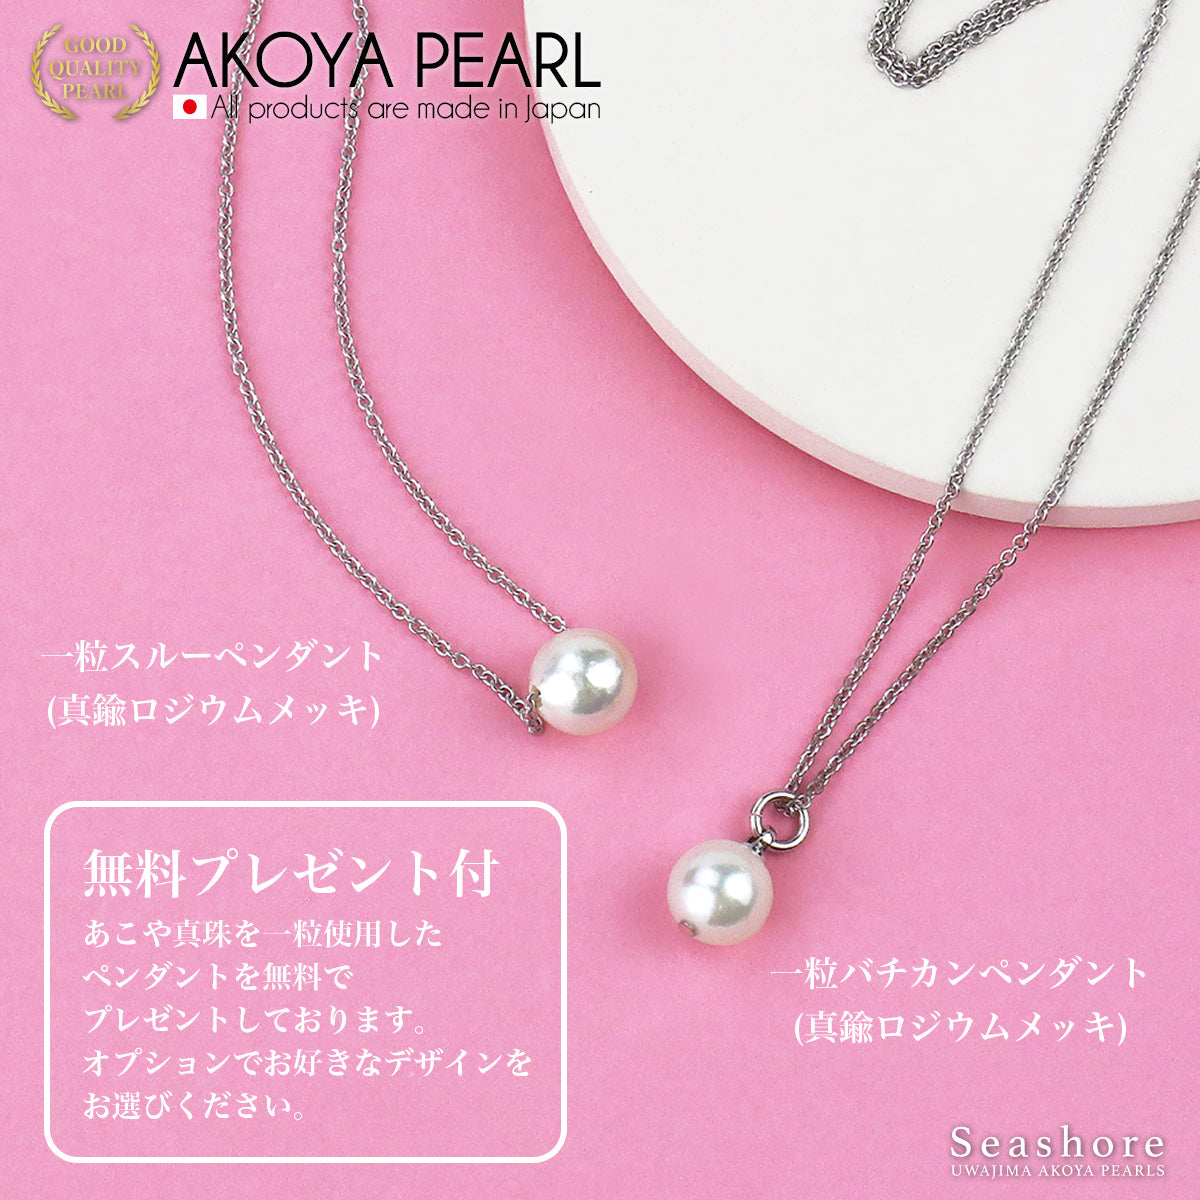 [灰色] 大号 Akoya 珍珠女士耳环 [8.0-9.0mm] 钛/SV925